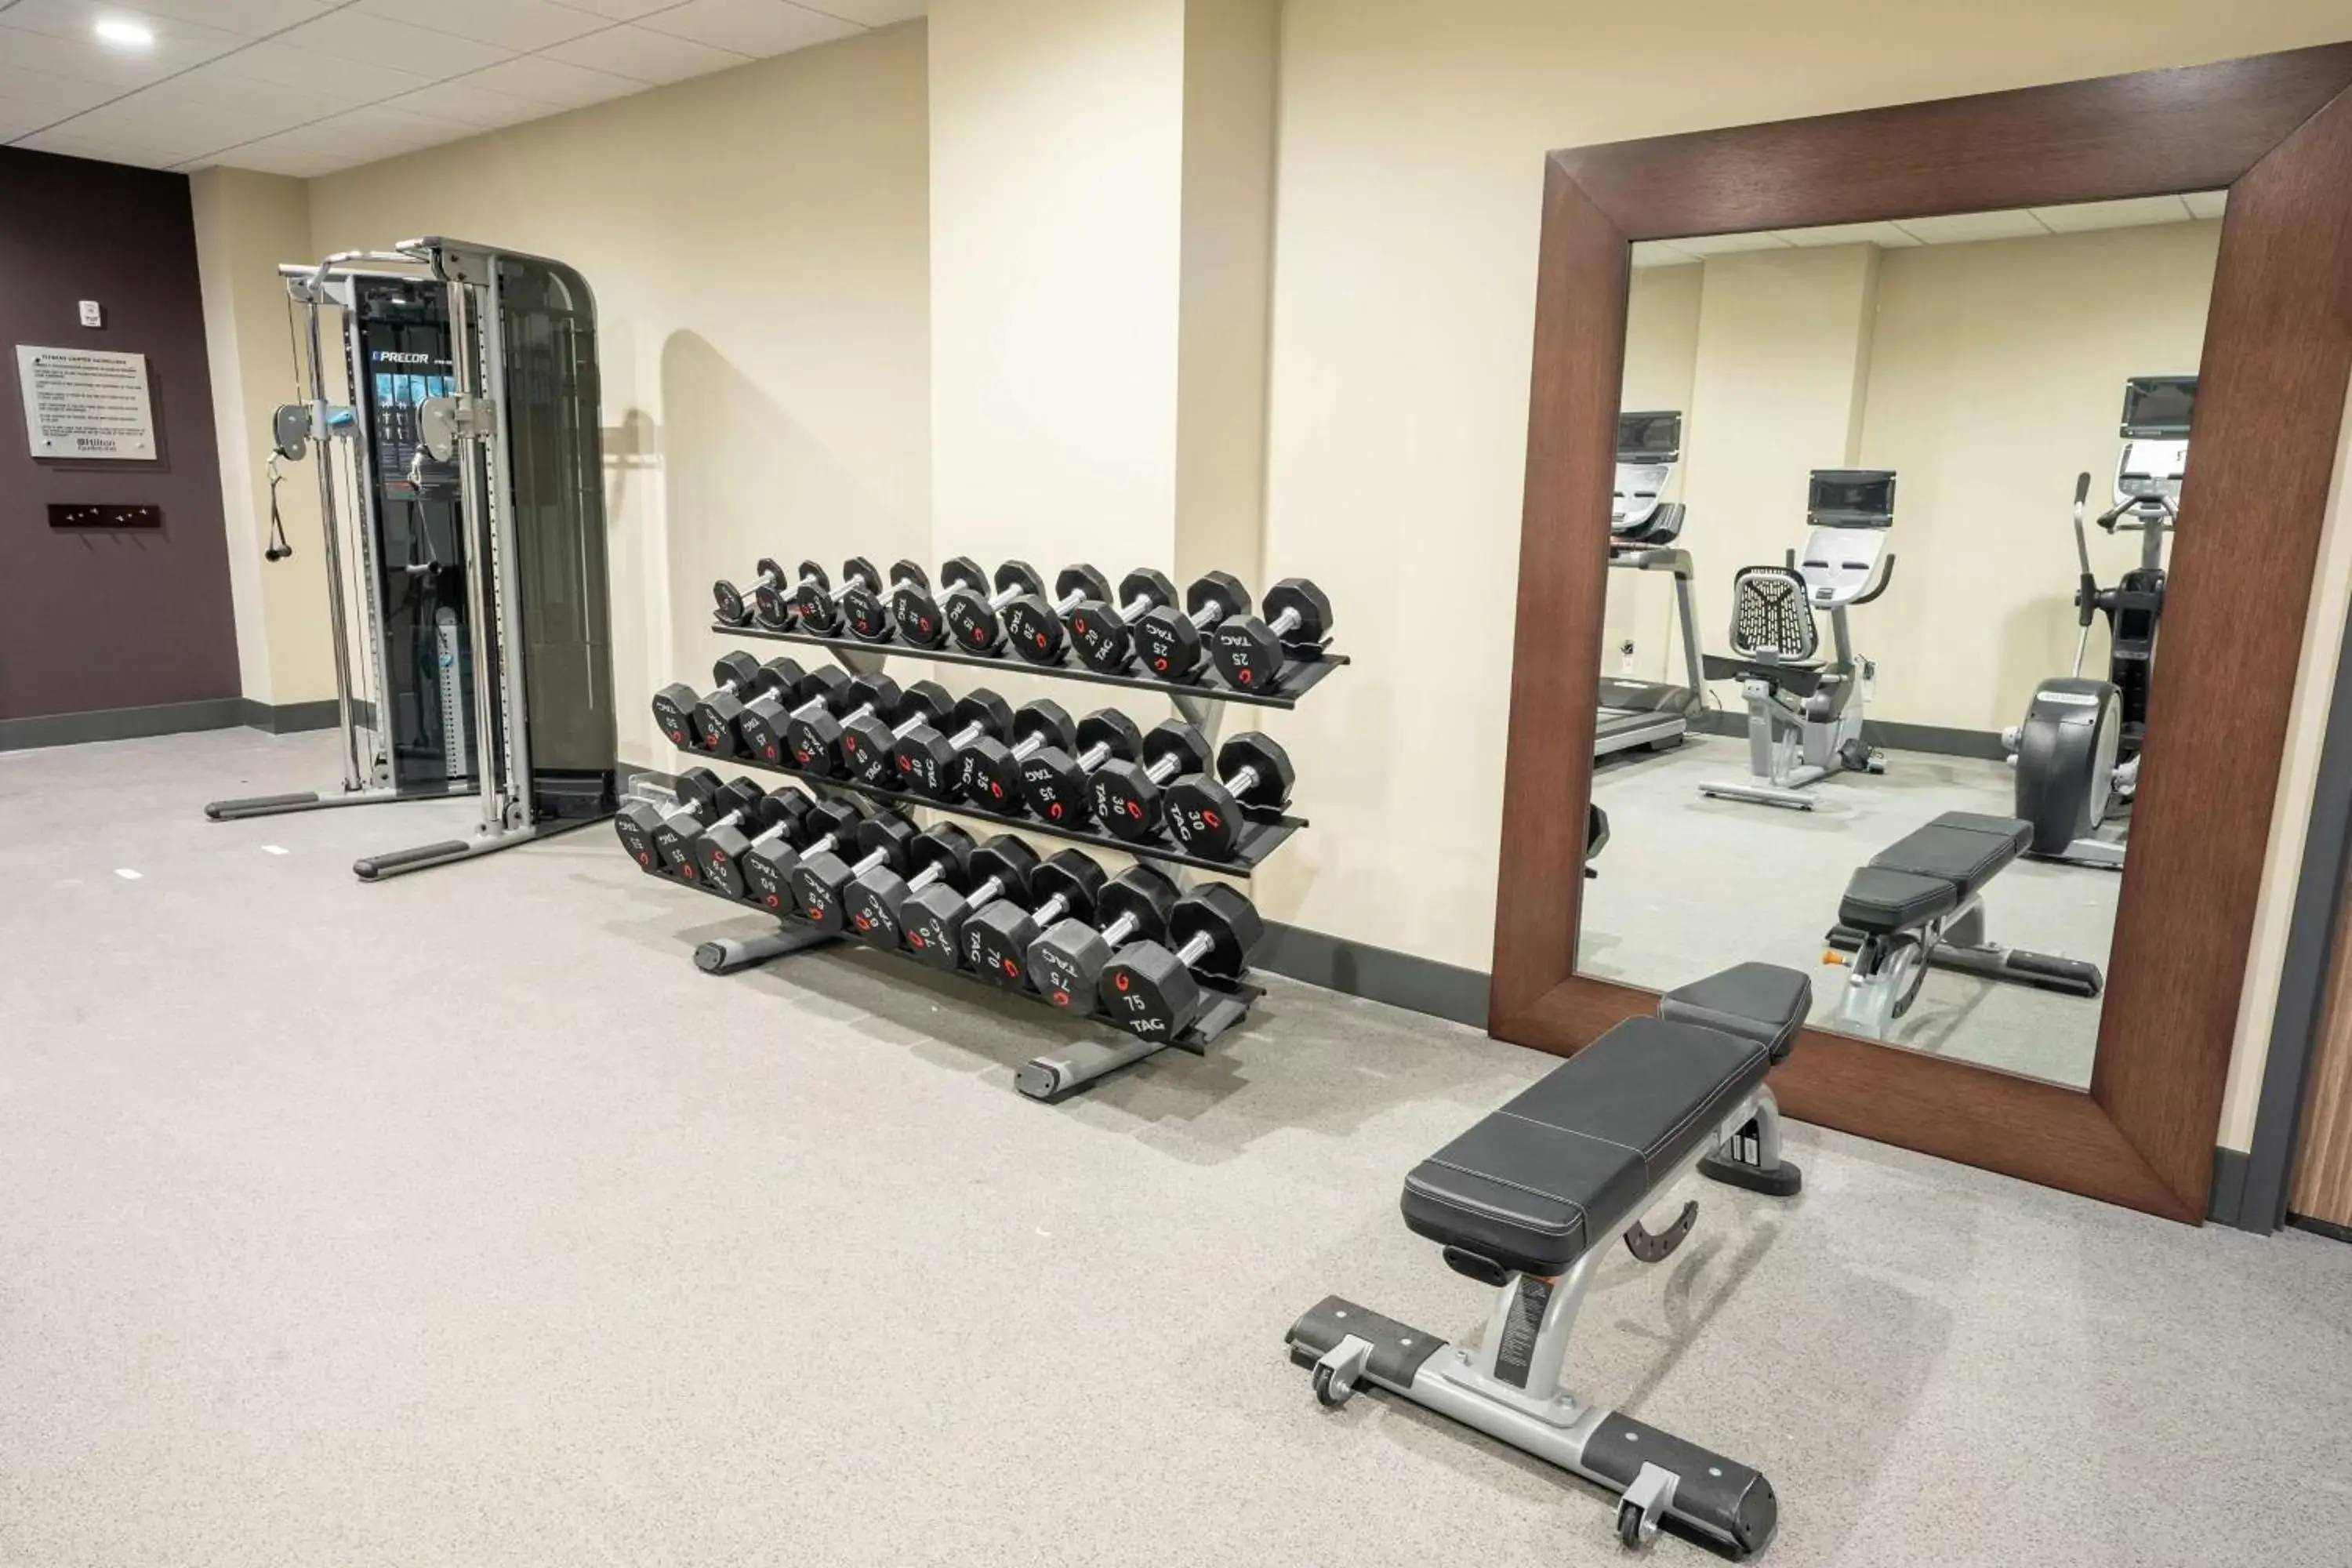 Fitness centre/facilities, Fitness Center/Facilities in Hilton Garden Inn Wichita Downtown, Ks